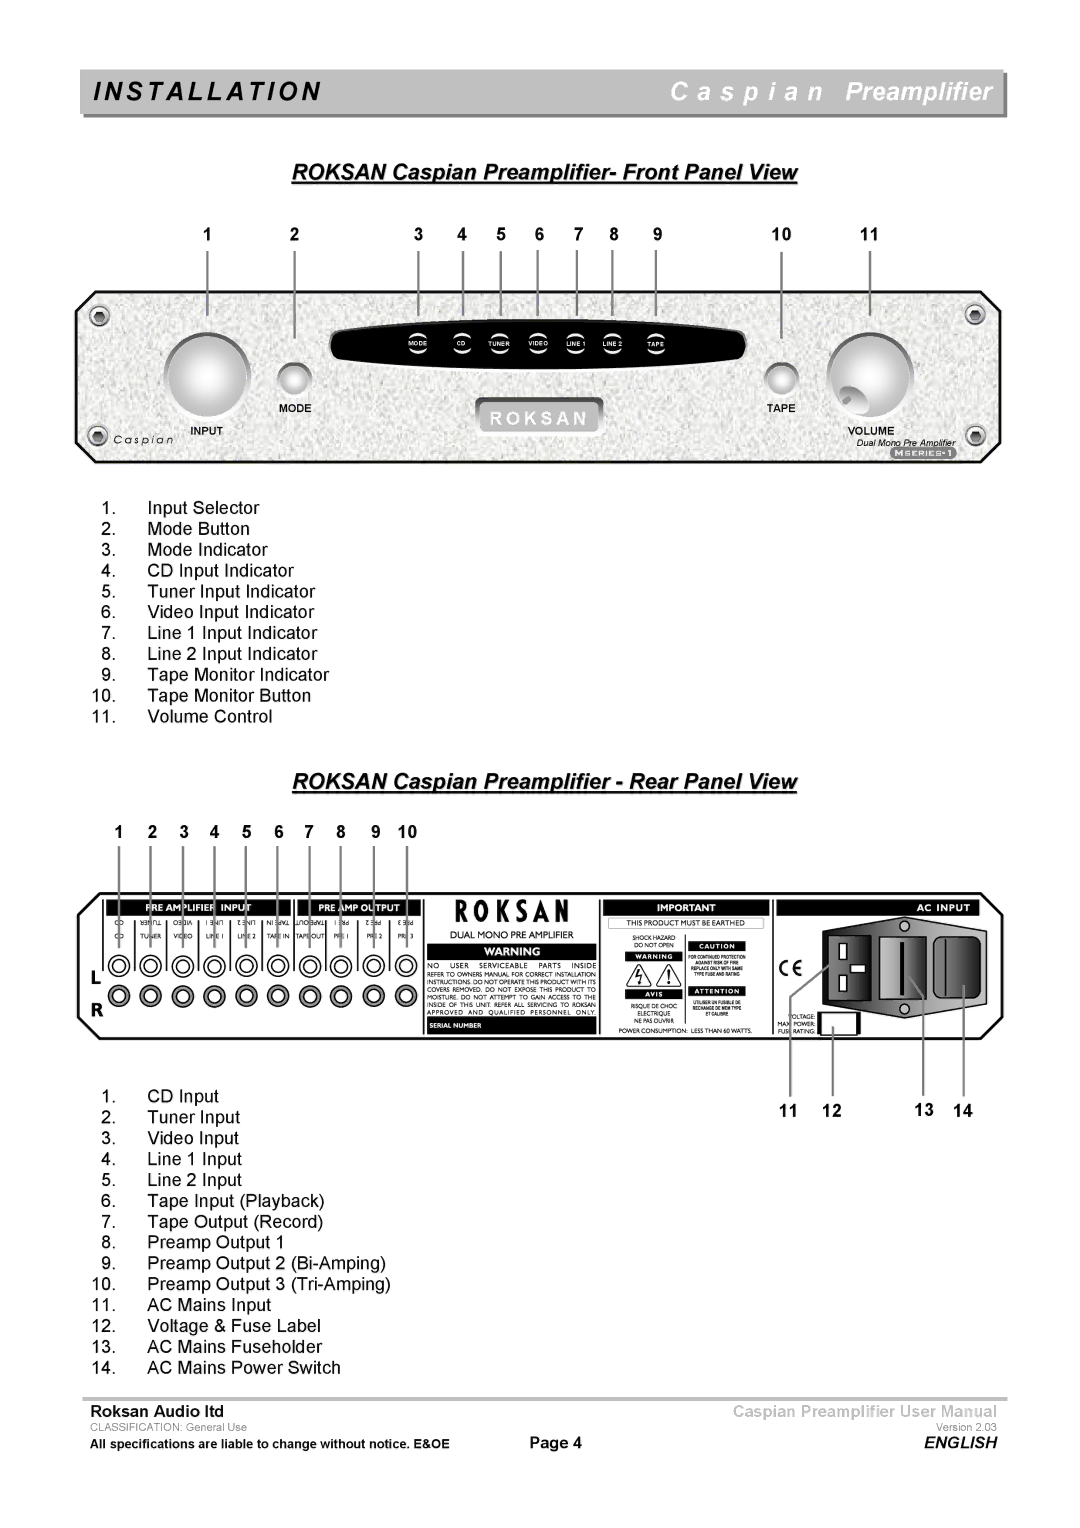 Roksan Audio M series --1 user manual Installation, 3 4 5 6 7 8 9 